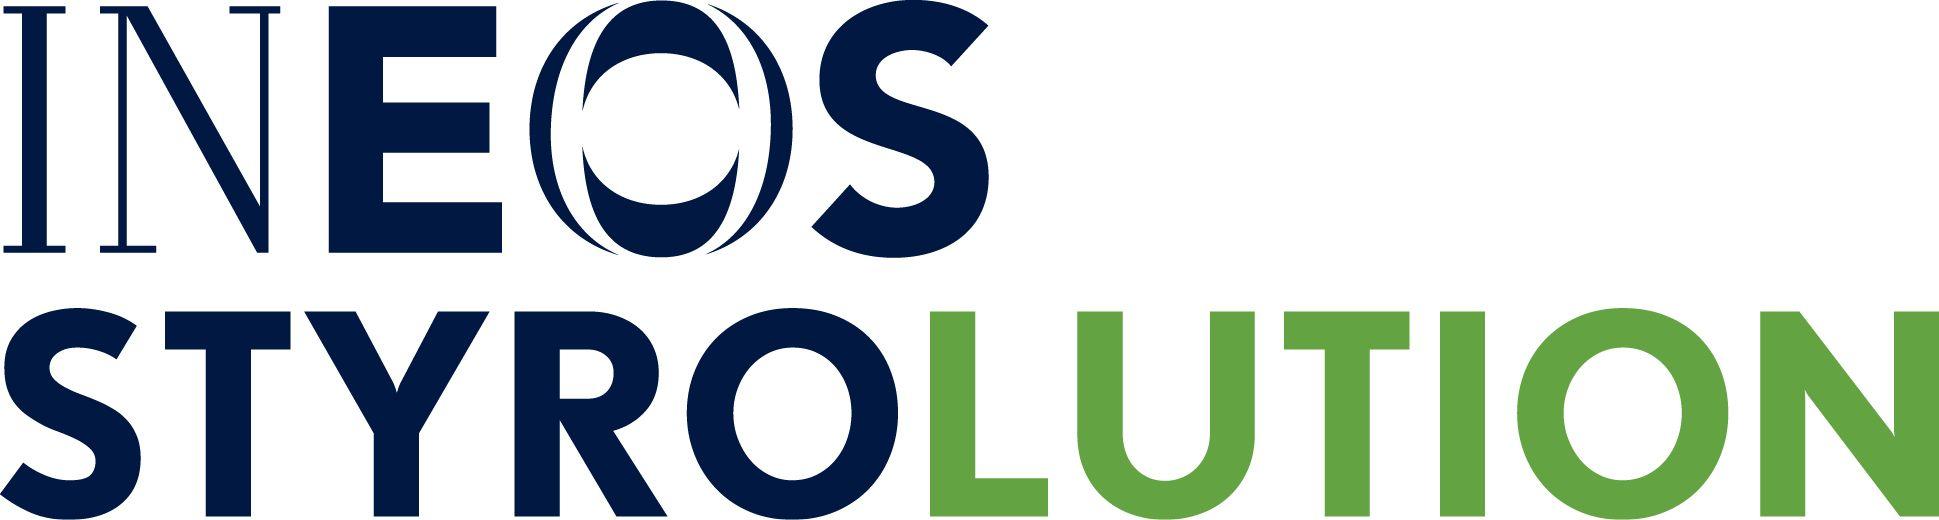 Ineos Logo - INEOS Styrolution